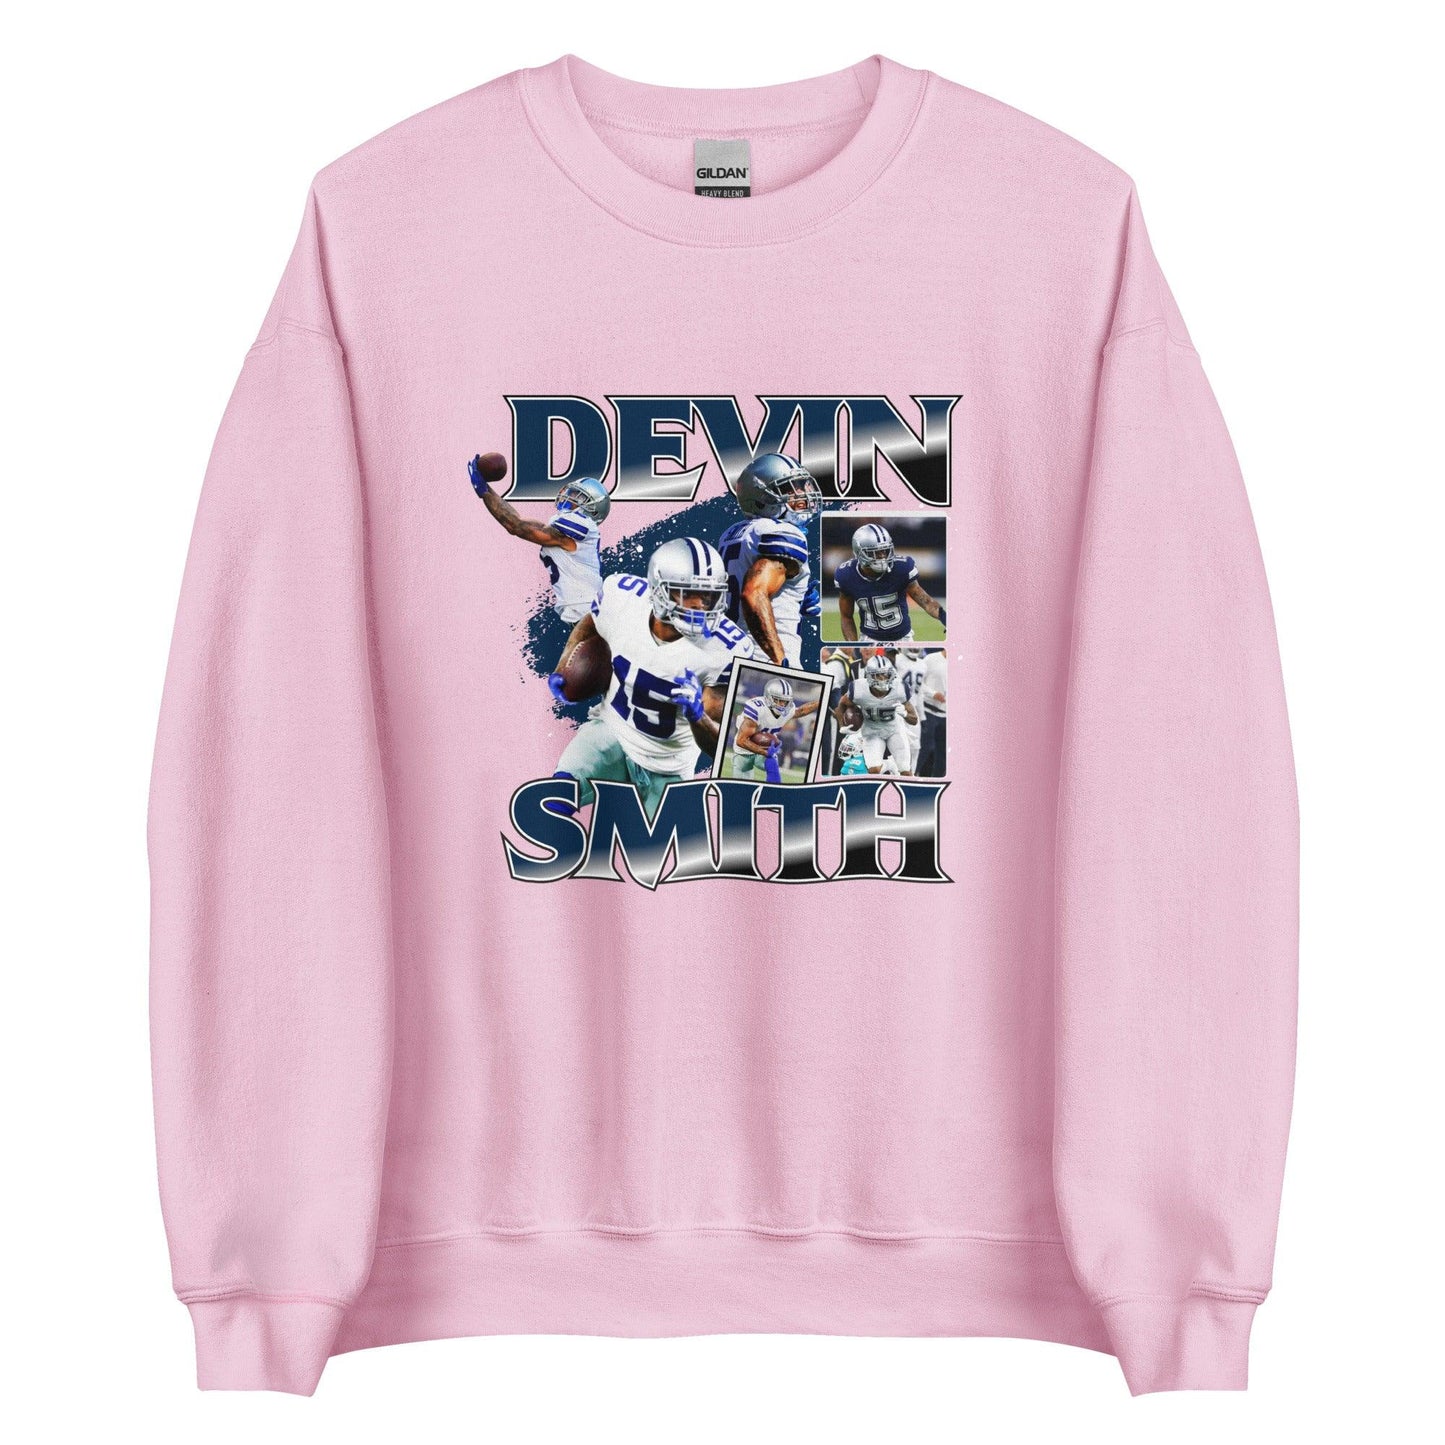 Devin Smith "Vintage" Sweatshirt - Fan Arch